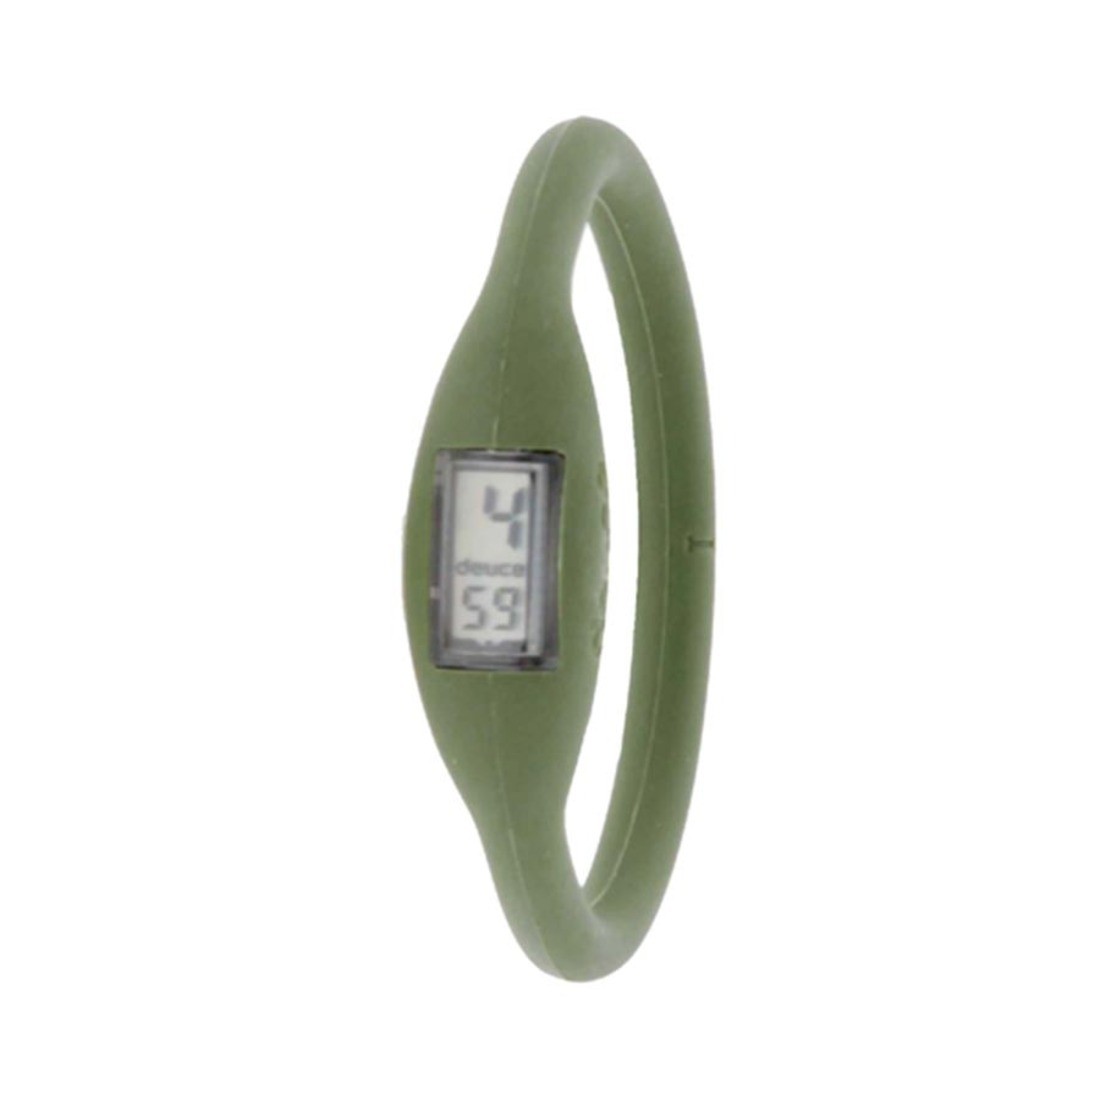 Deuce Brand Original Watch (army green)